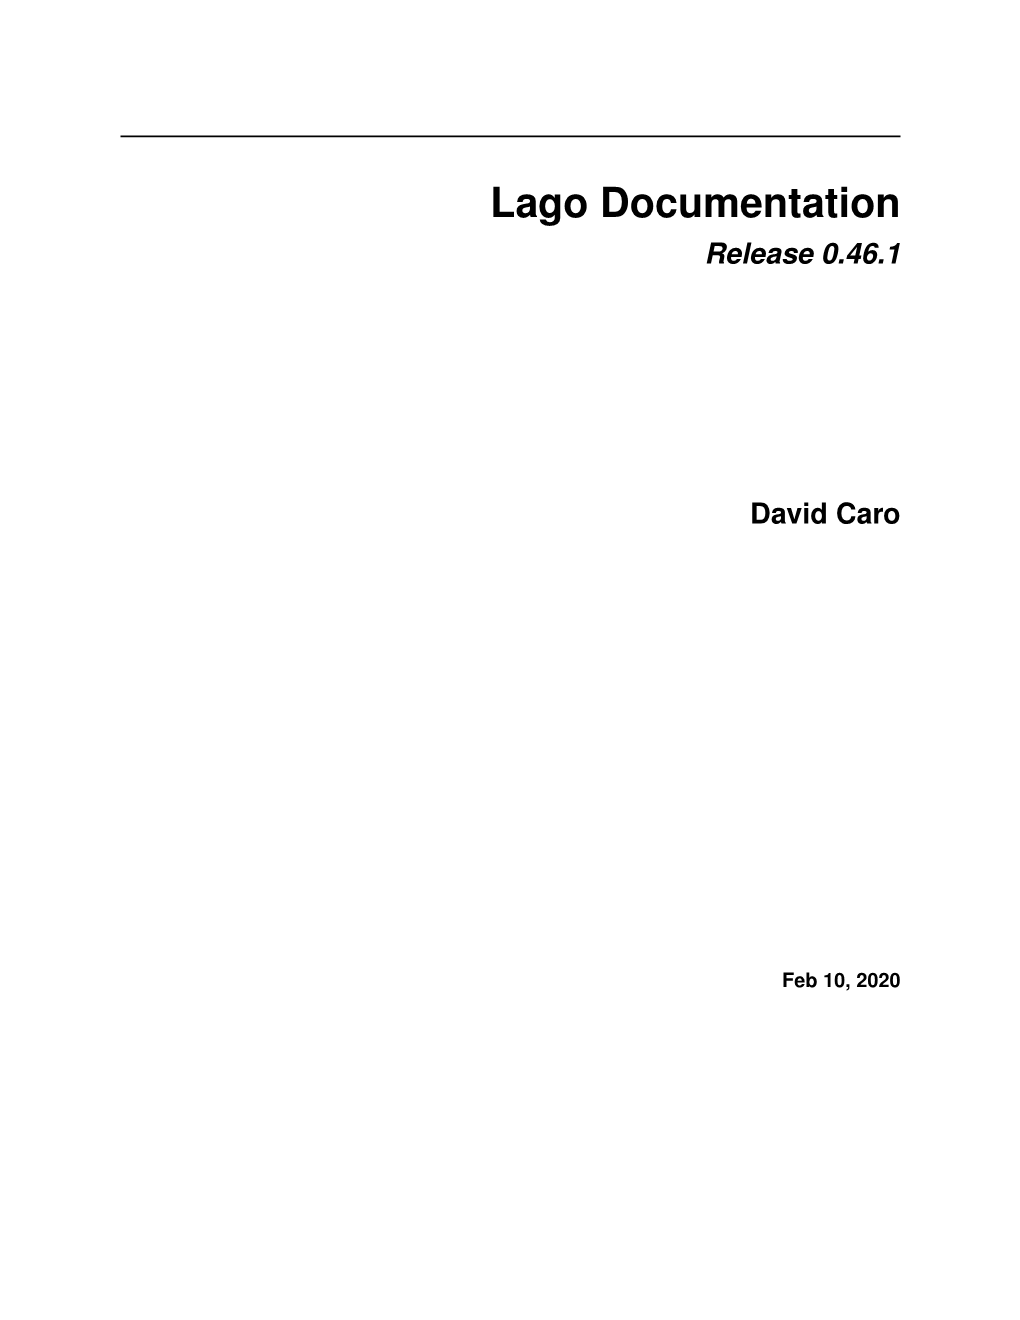 Lago Documentation Release 0.46.1